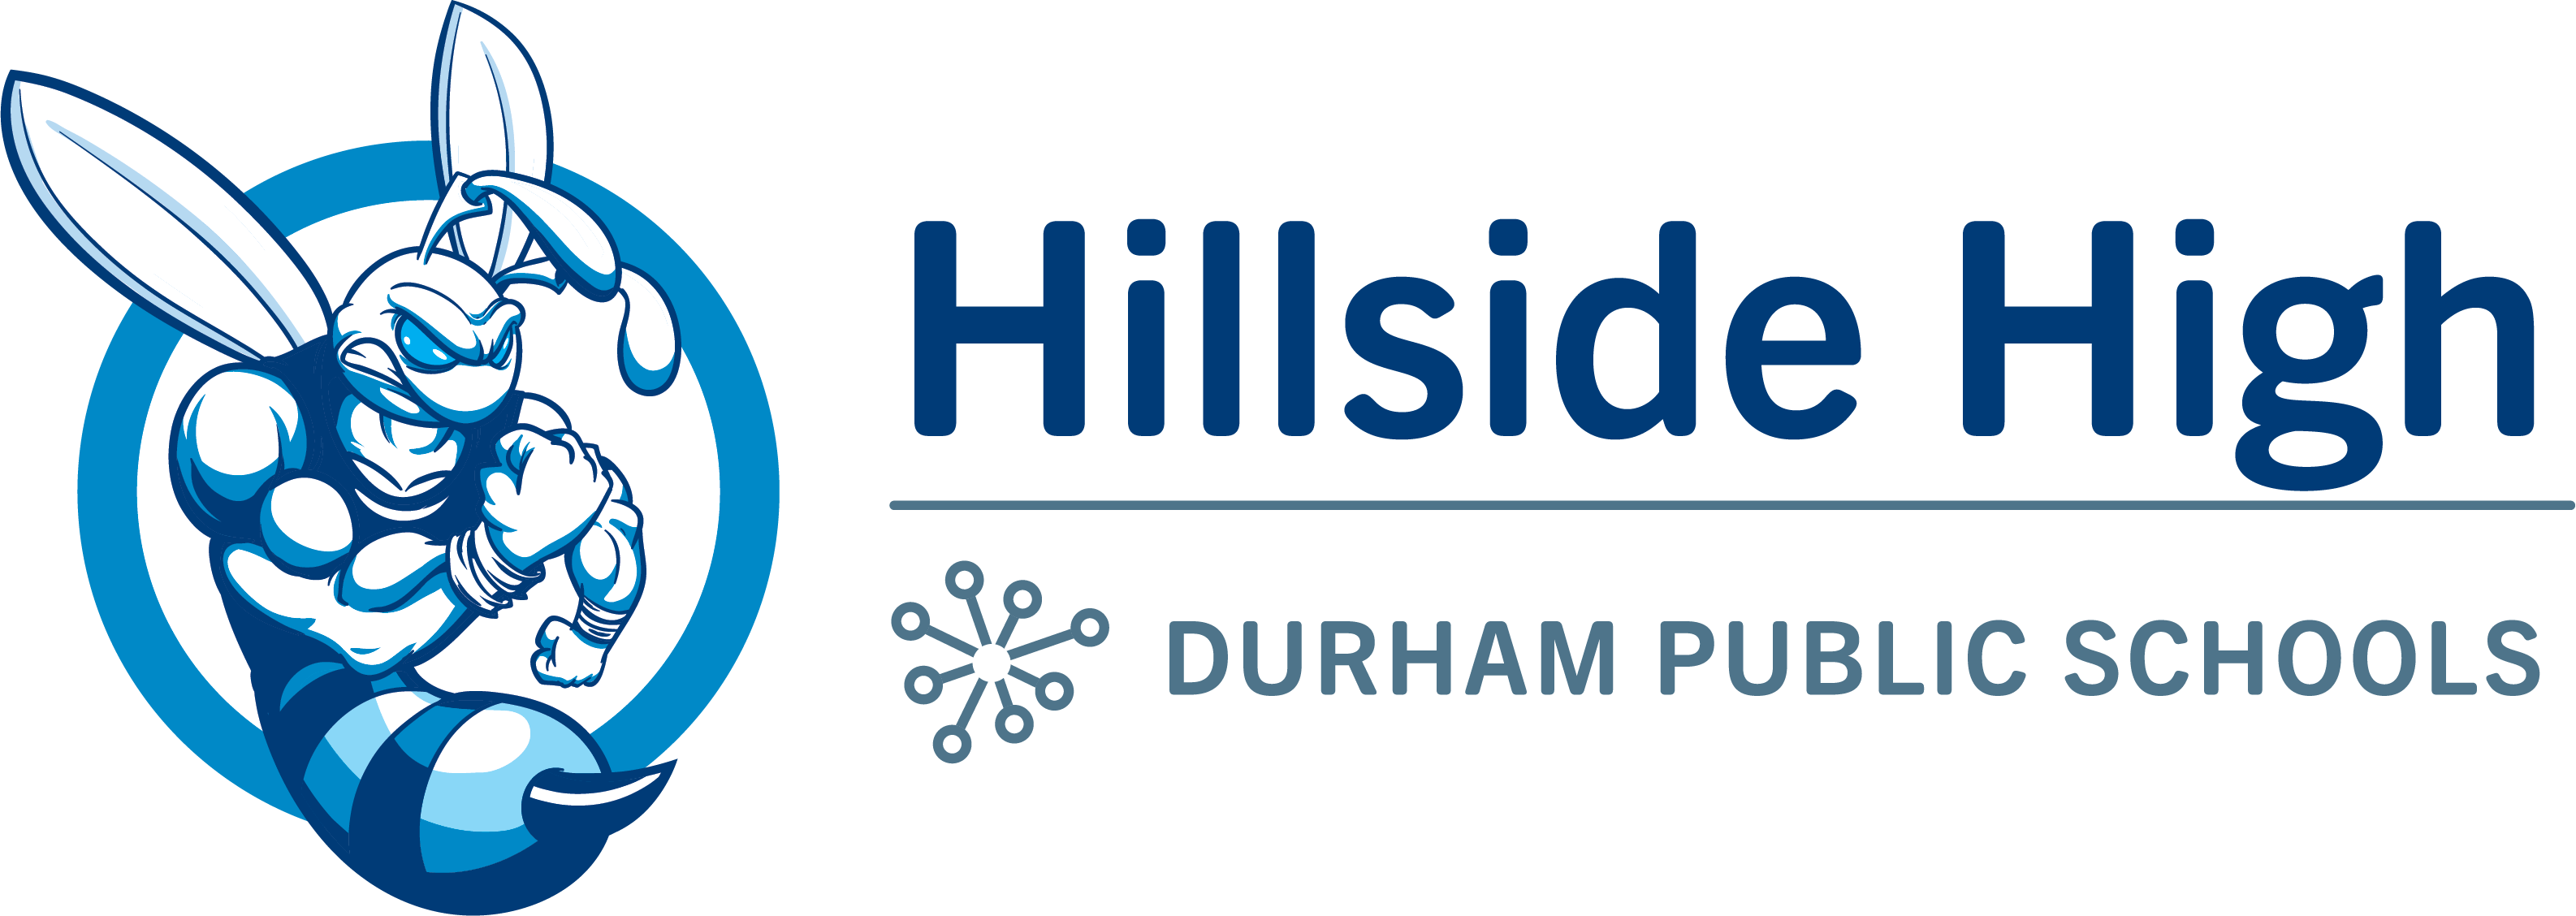 High Logo - Hillside High School / Homepage